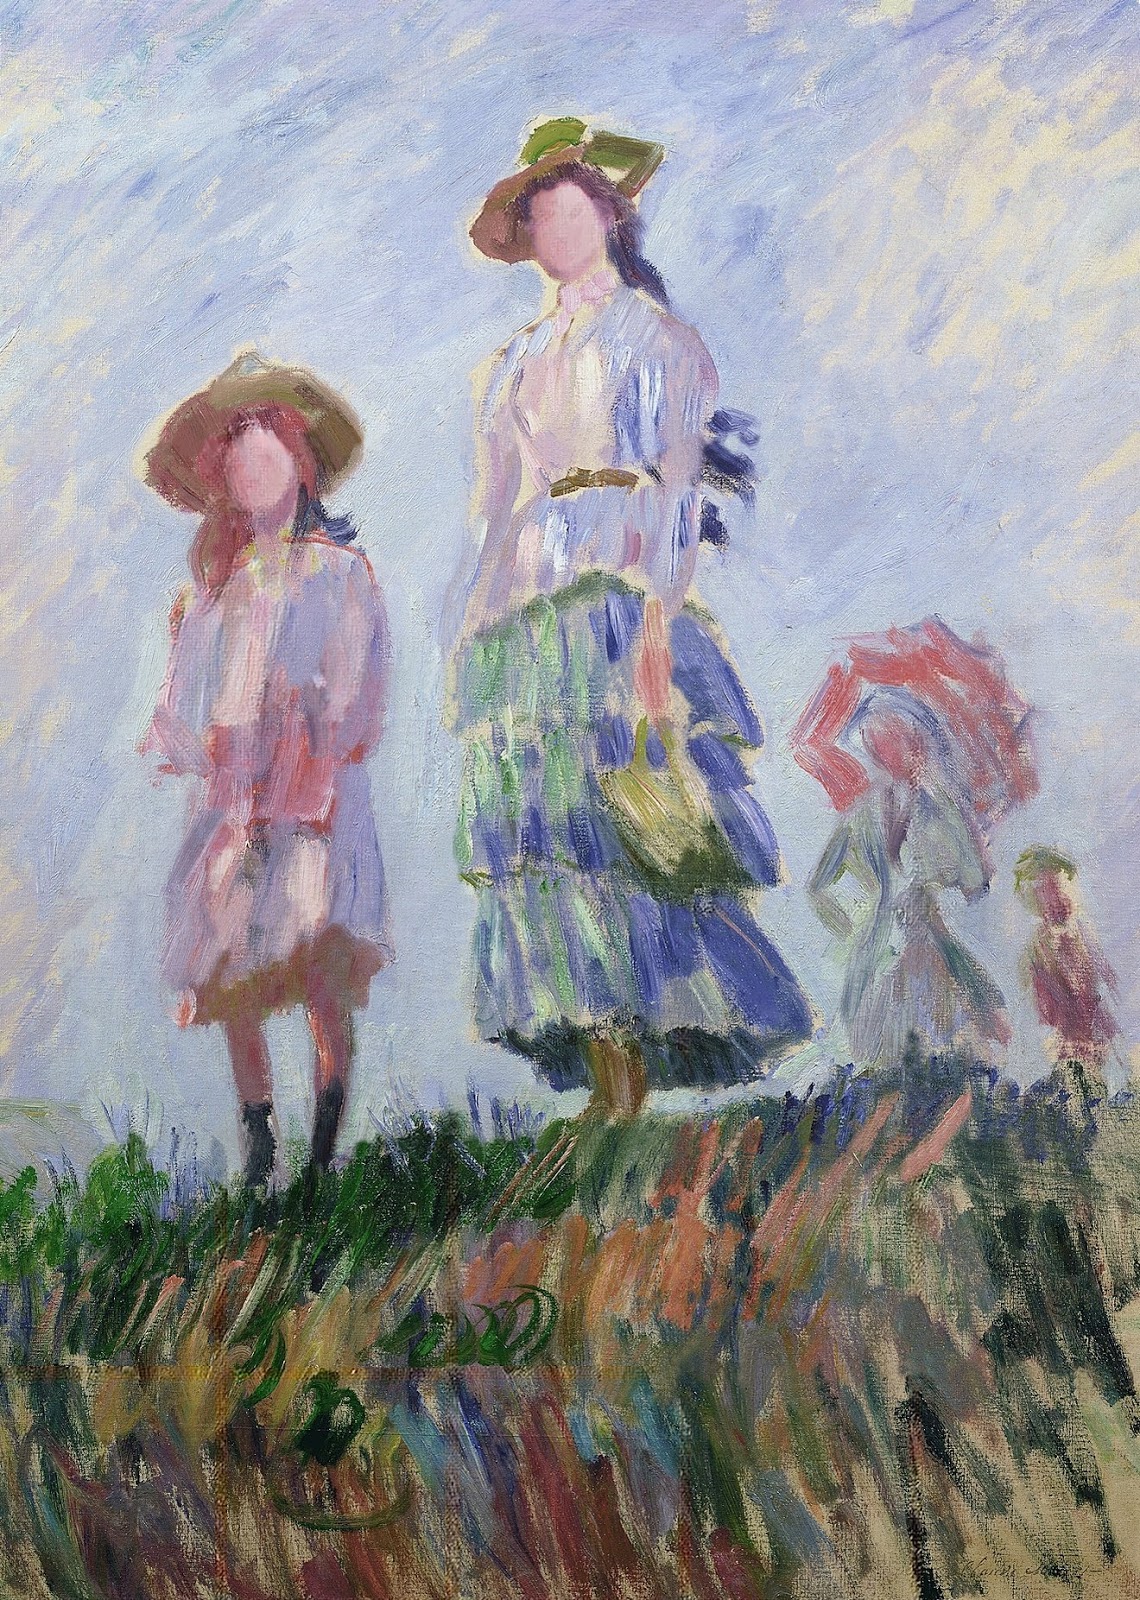 Claude+Monet-1840-1926 (792).jpg